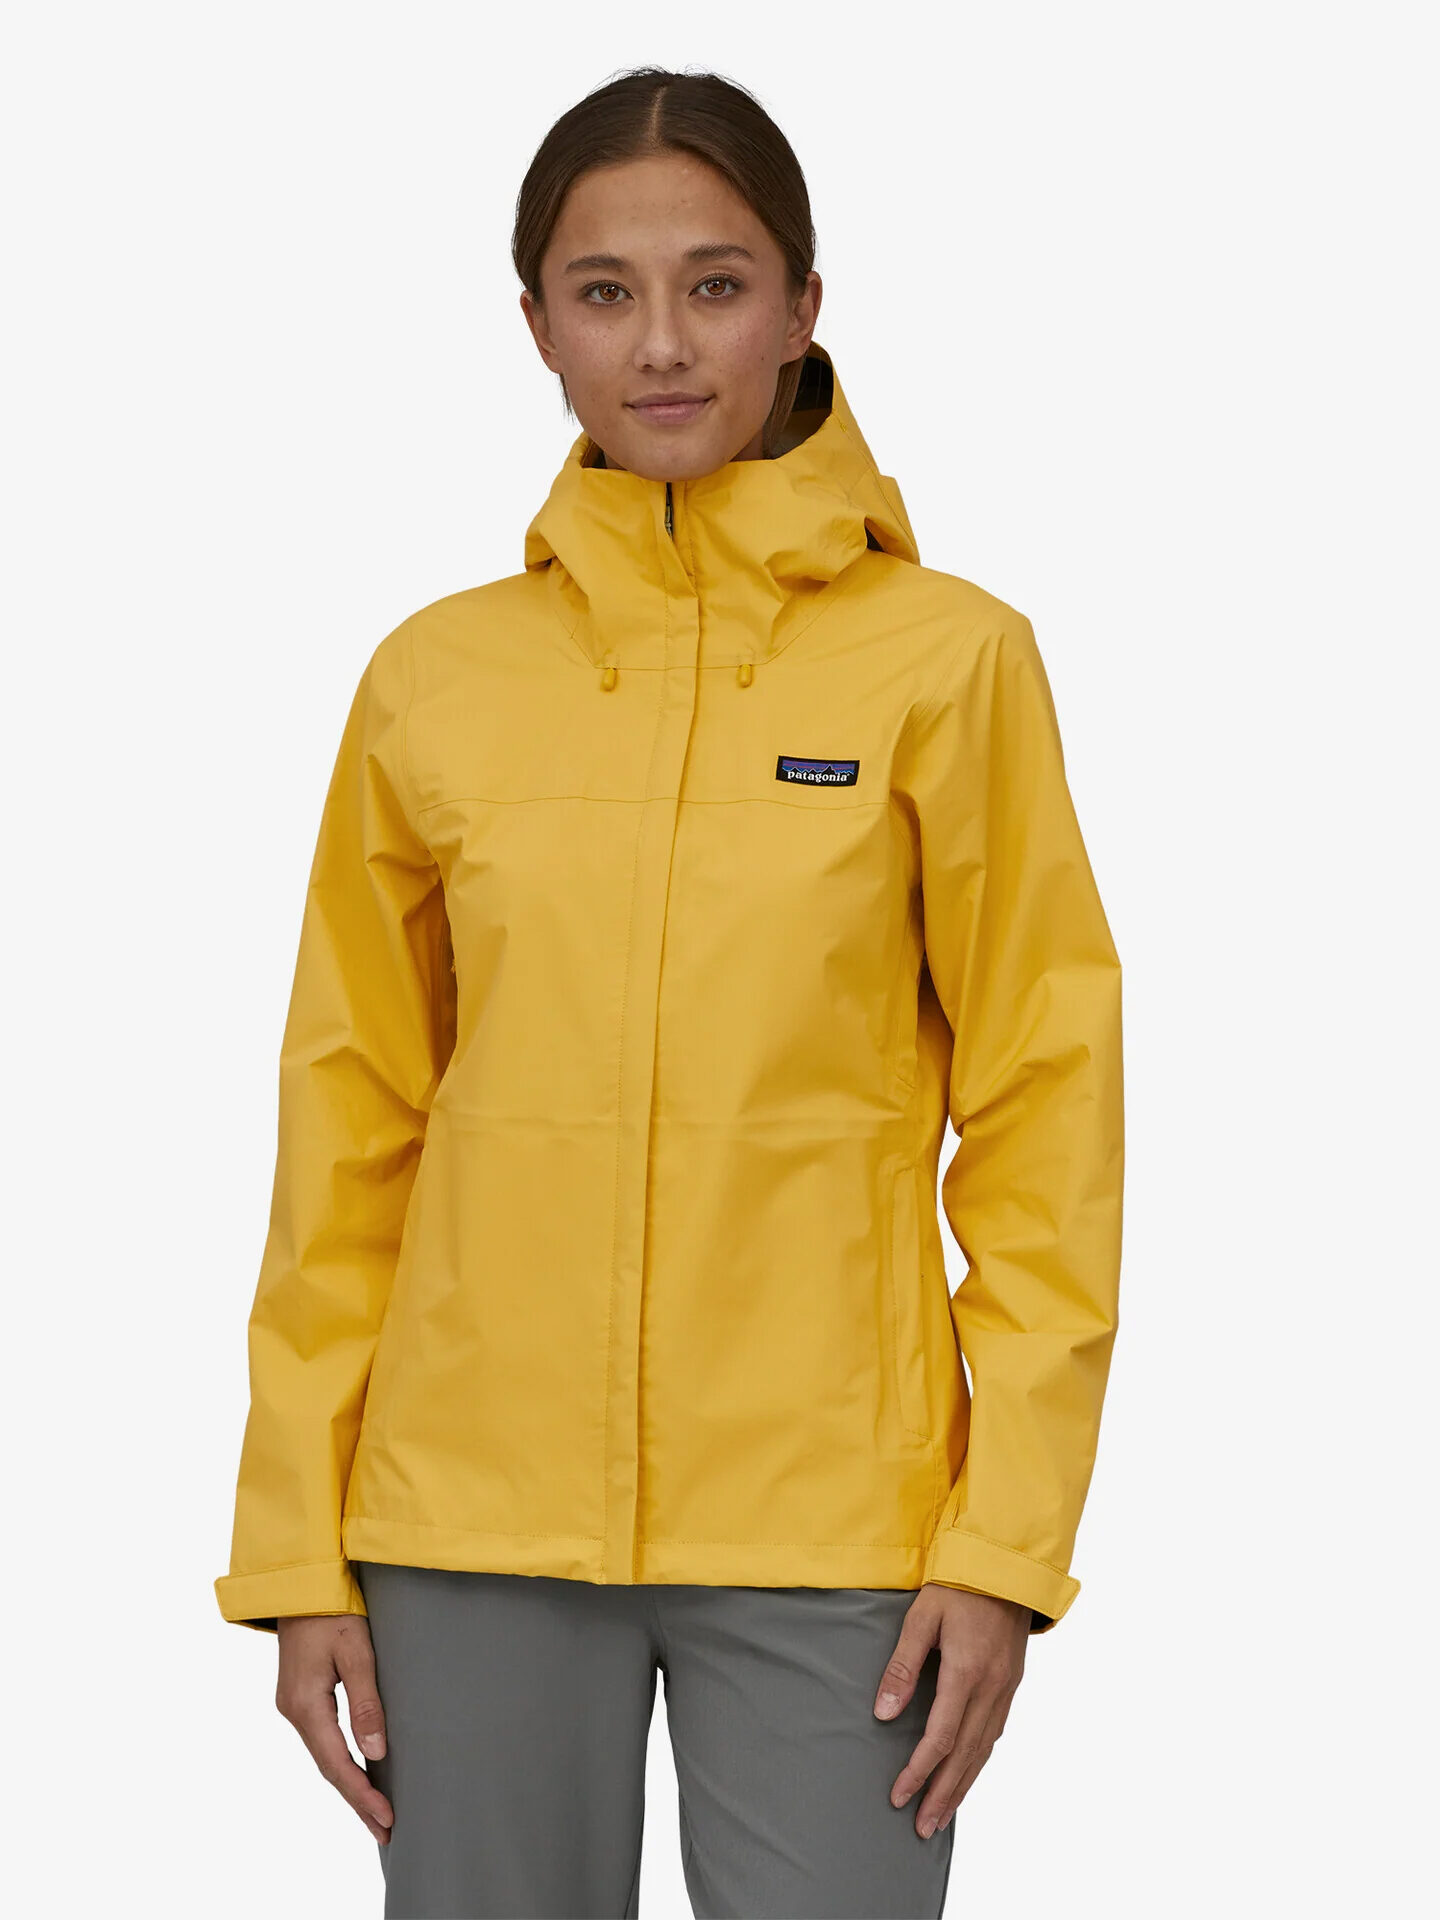 Patagonia women's rain jacket in yellow.